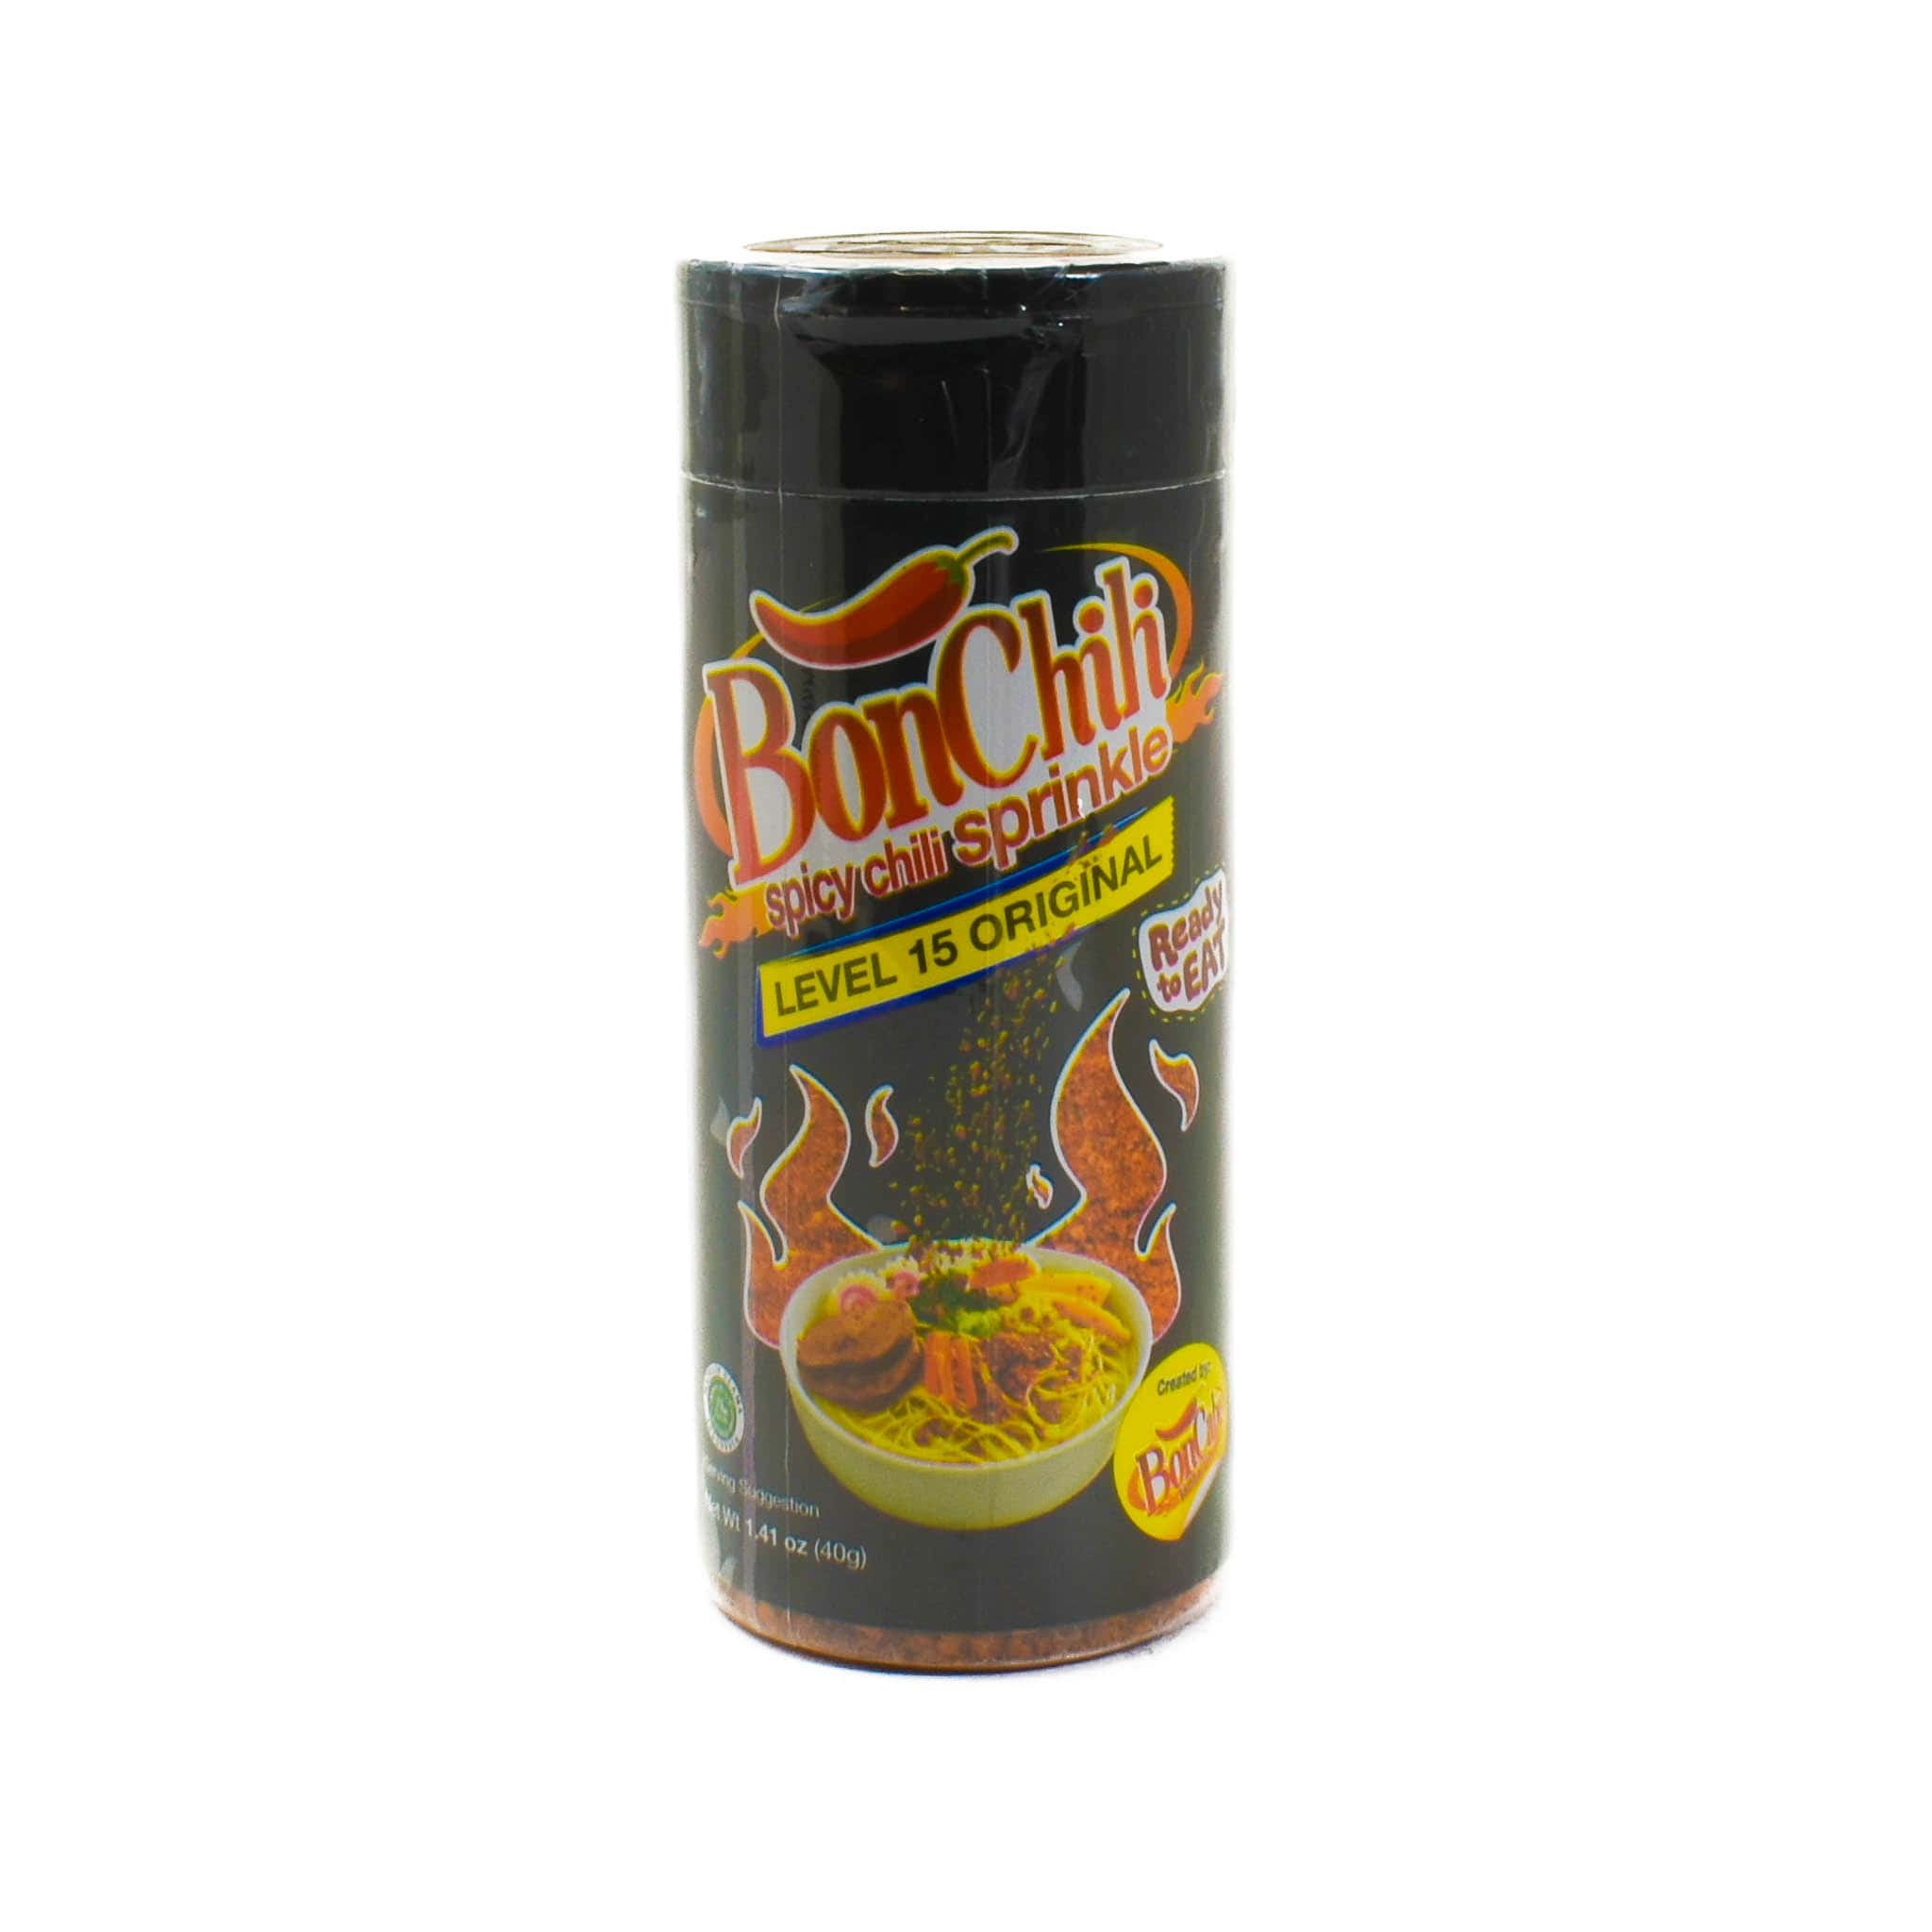 Bonchili Spicy Sprinkle Level 15 Original Flavour 40g